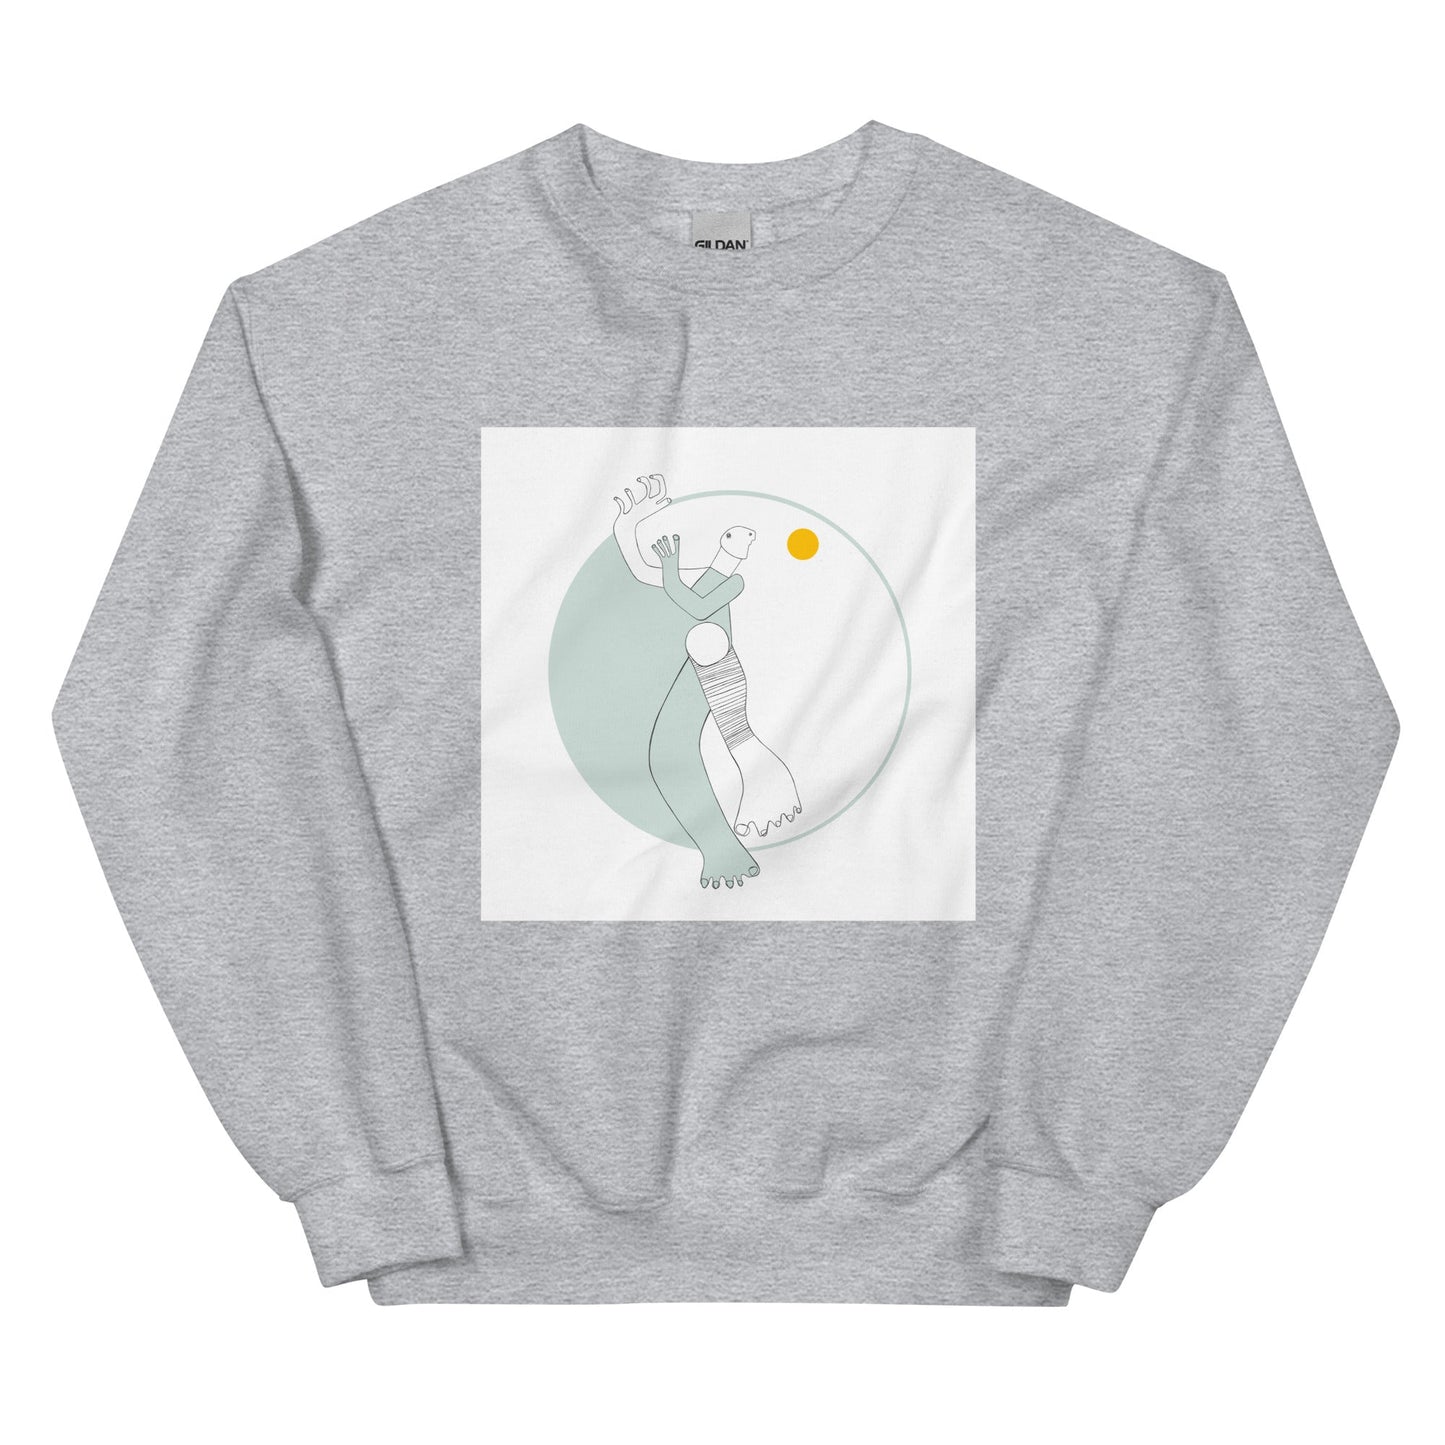 unisex-sweatshirt-dance-with-the-moon-2-sport-grey